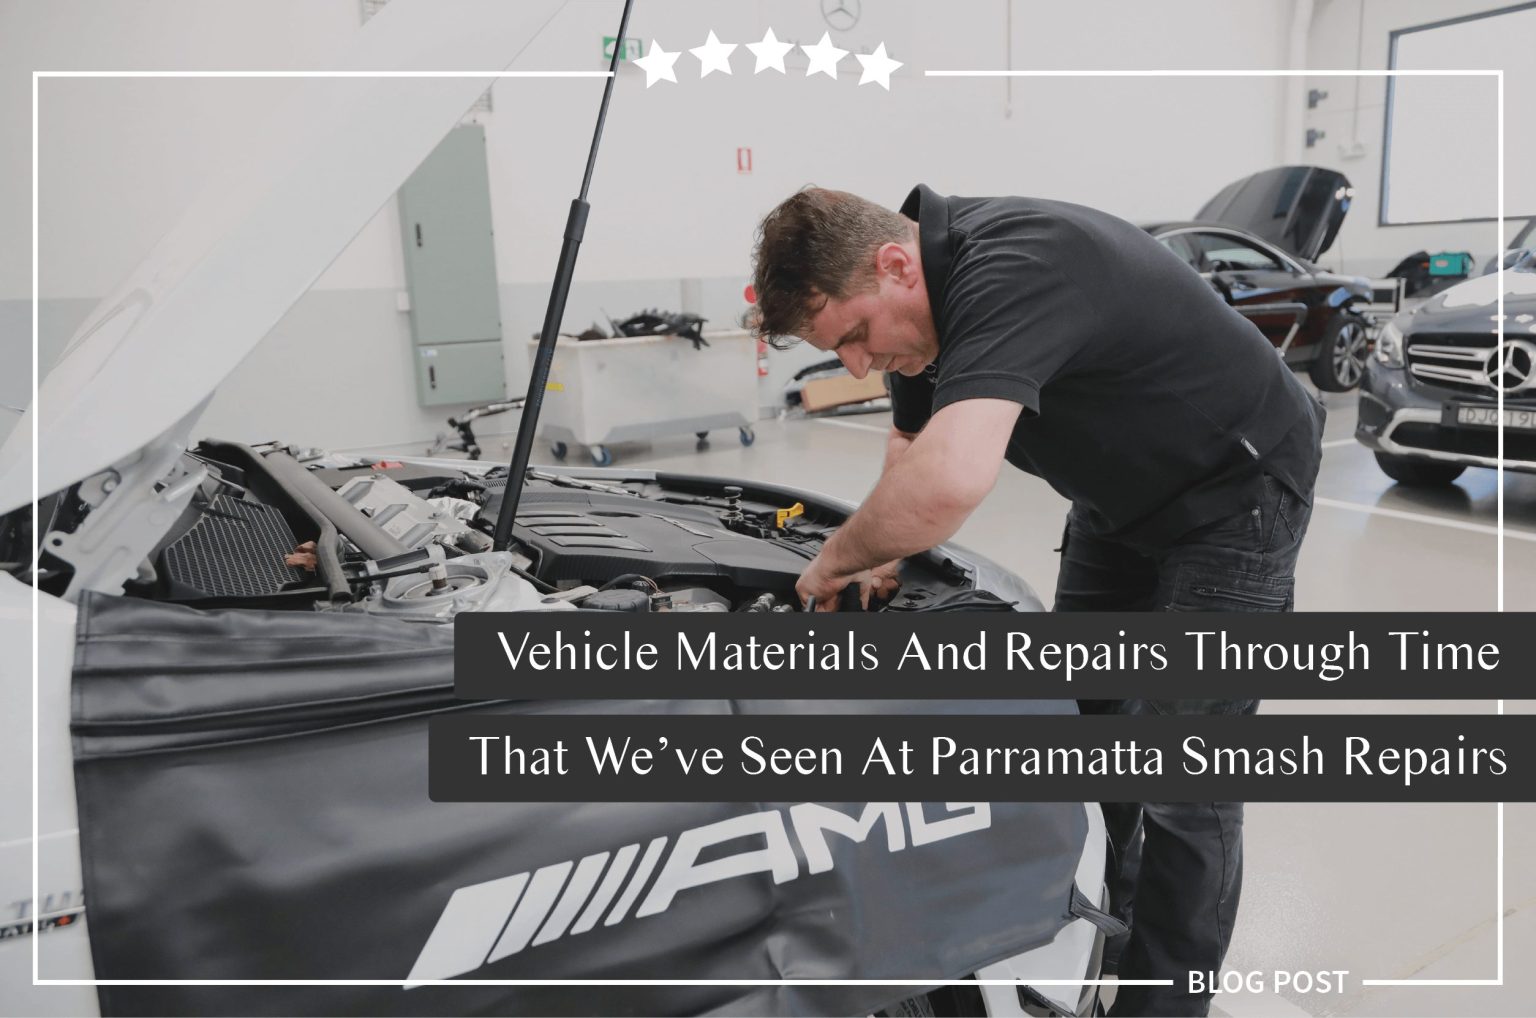 Vehicle Materials And Repairs Through Time That We’ve Seen At Parramatta Smash Repairs